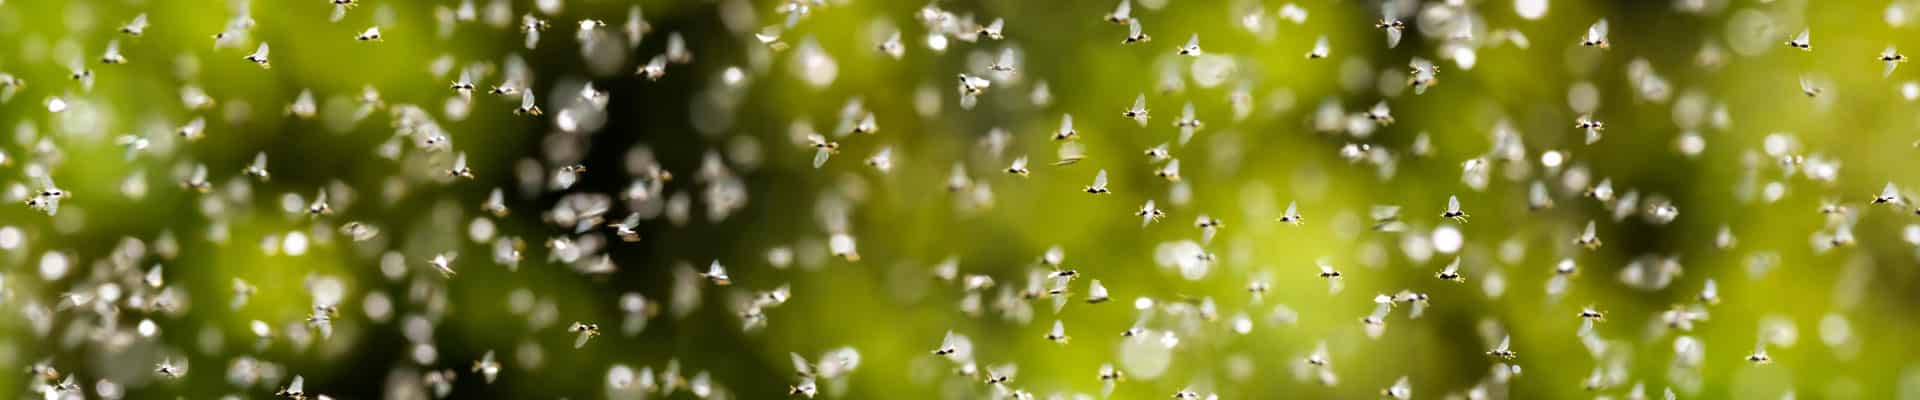 Swarm Of Flying Ants